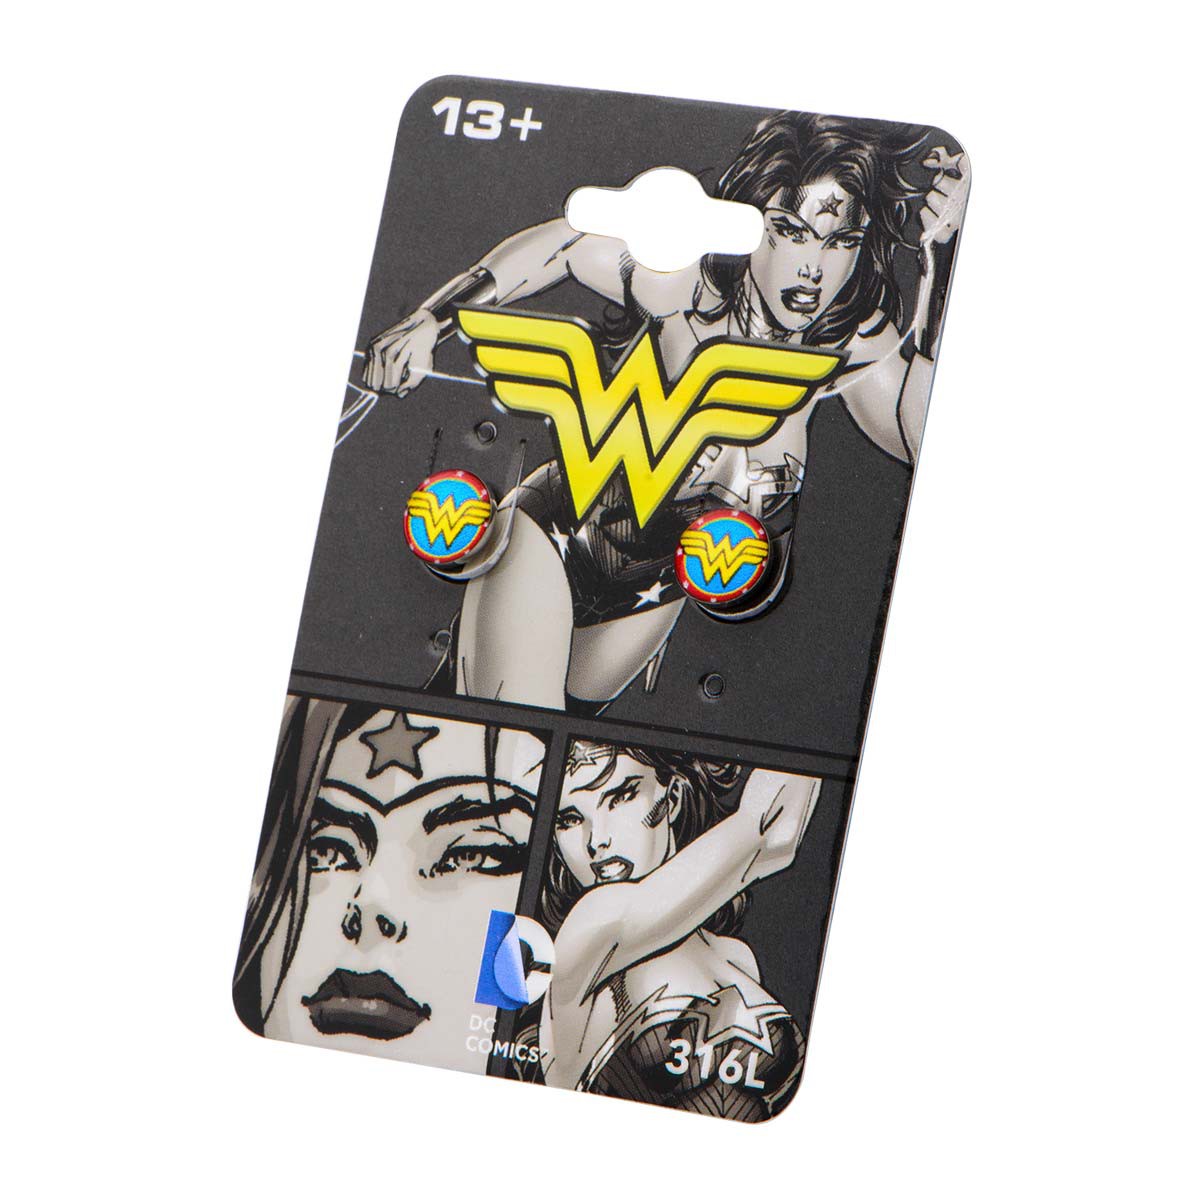 Wonder Woman Round Logo Earrings